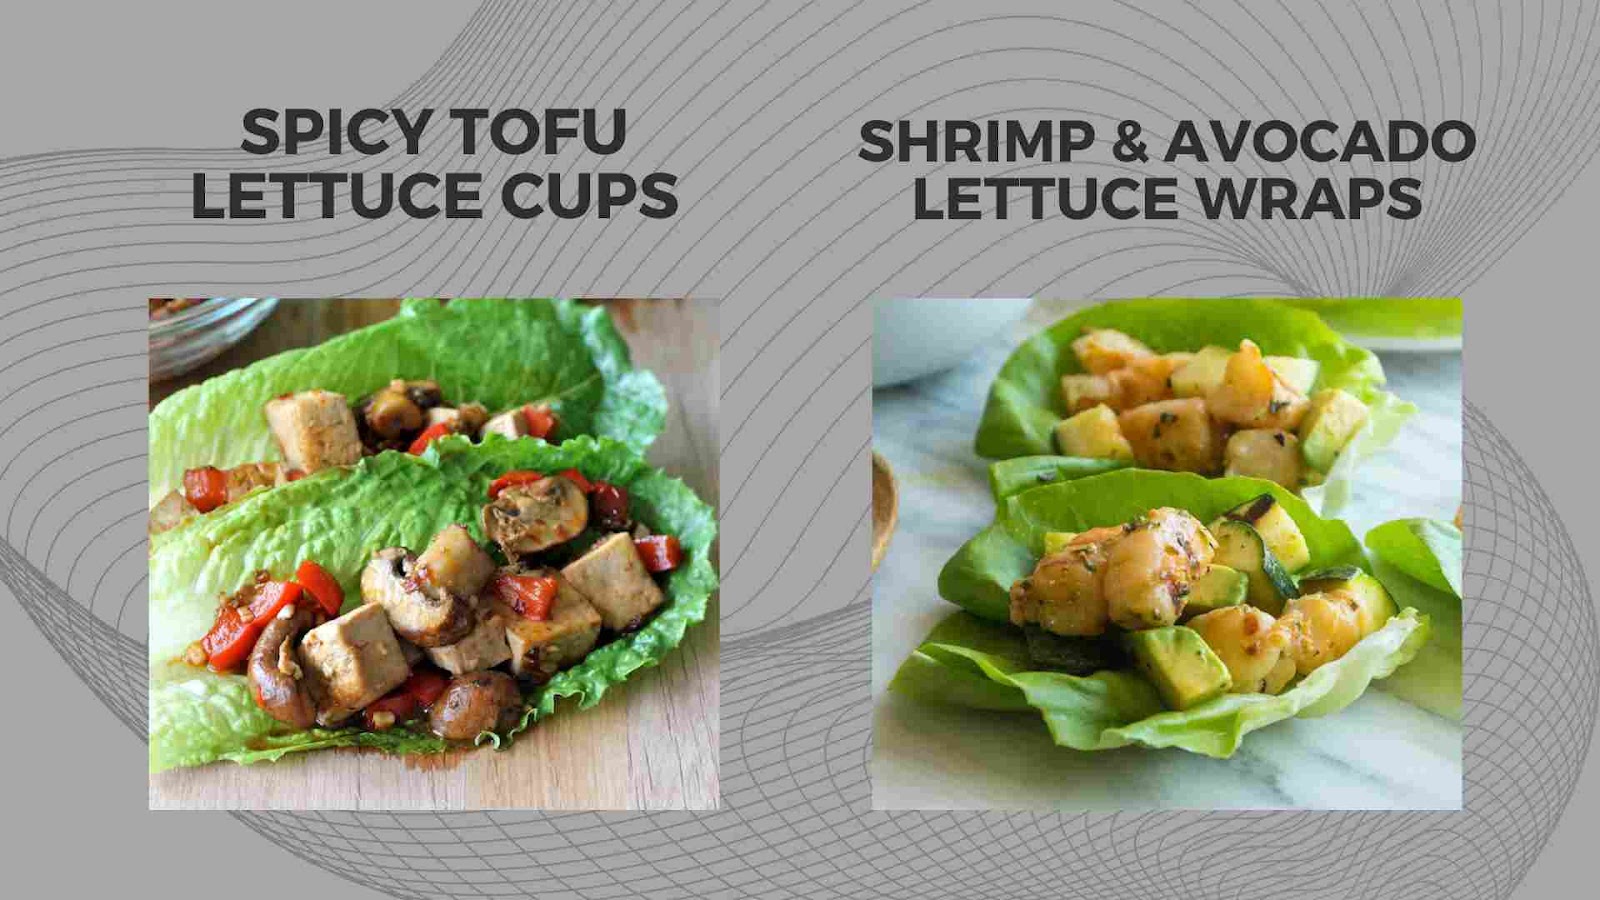 Spicy Tofu Lettuce Cups & Shrimp & Avocado Lettuce Wrap